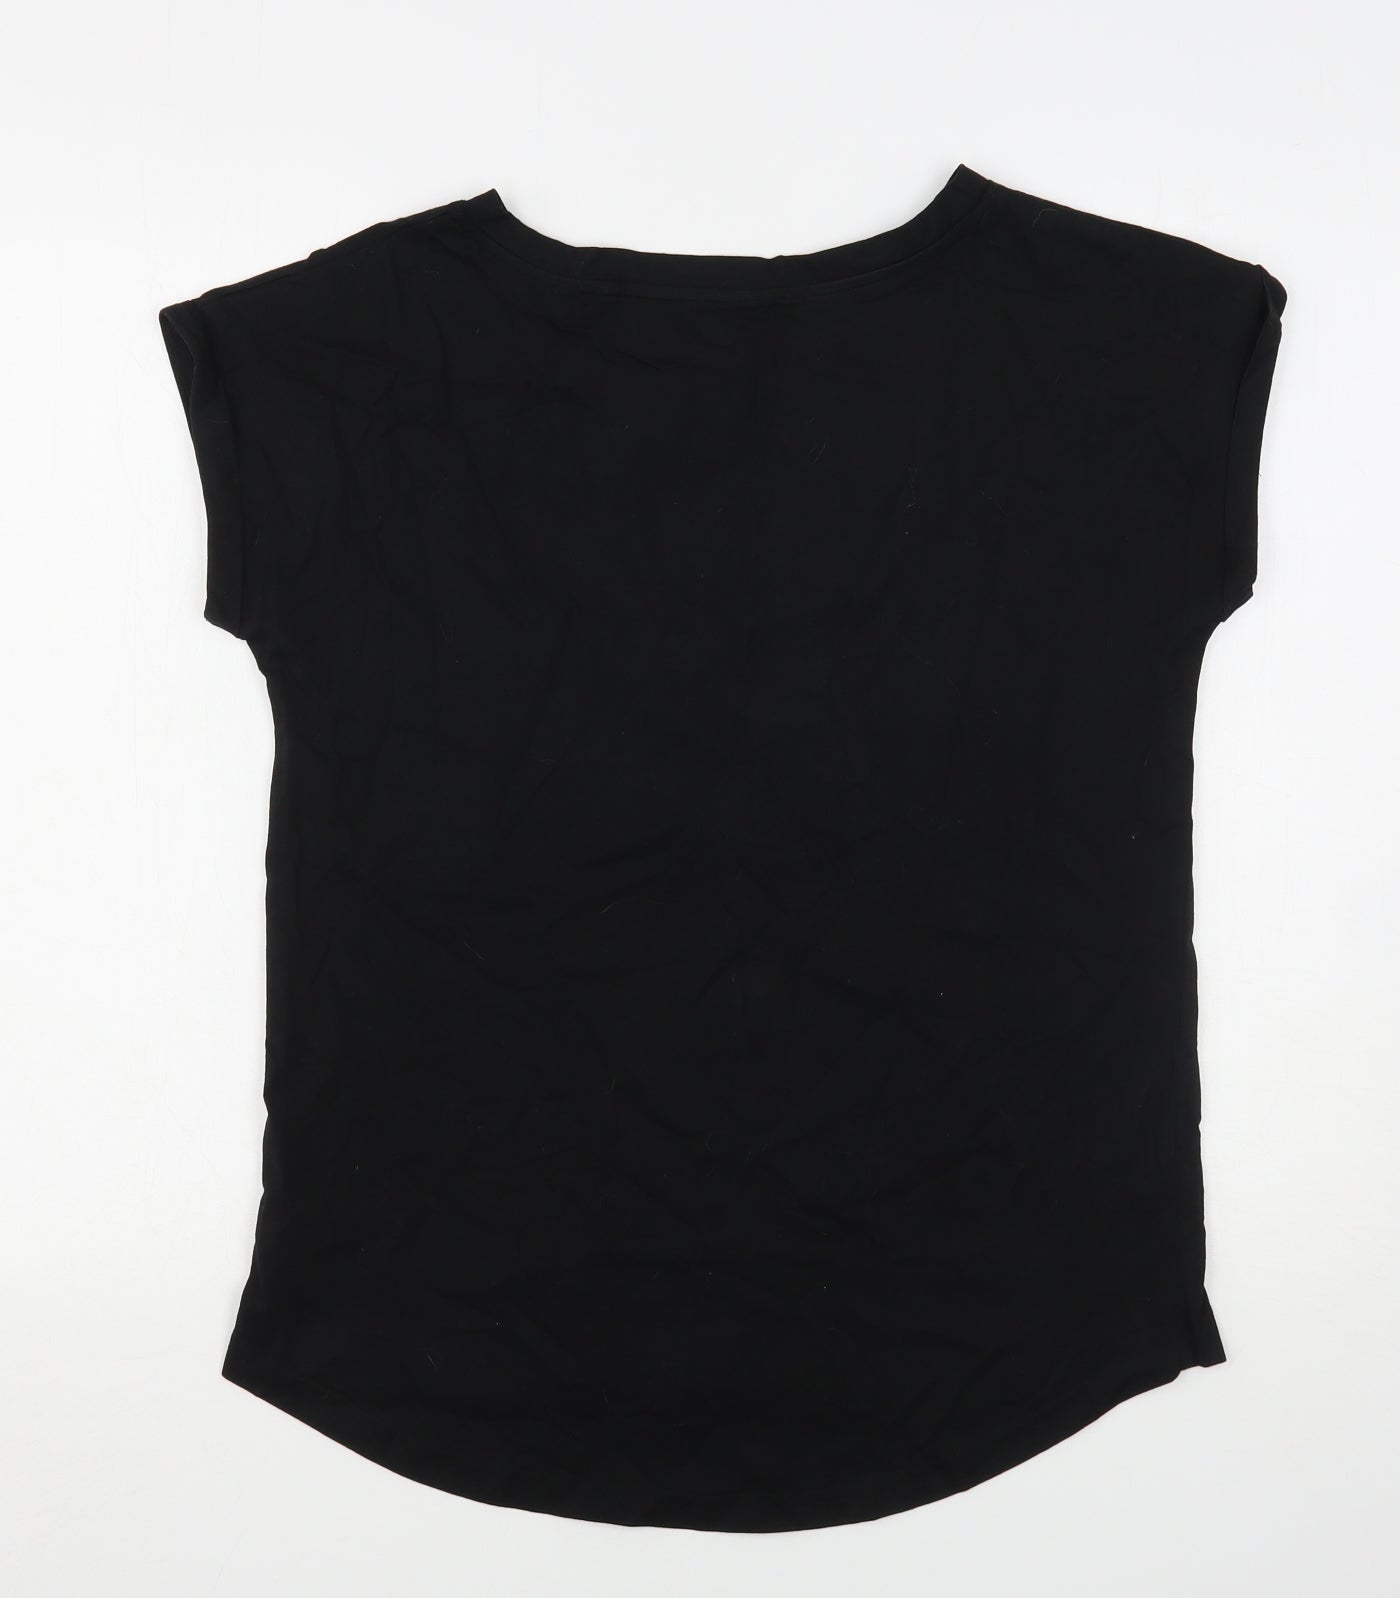 Bonprix Ladies Black Floral Print Top t-shirt Size 12/14 BRAND NEW